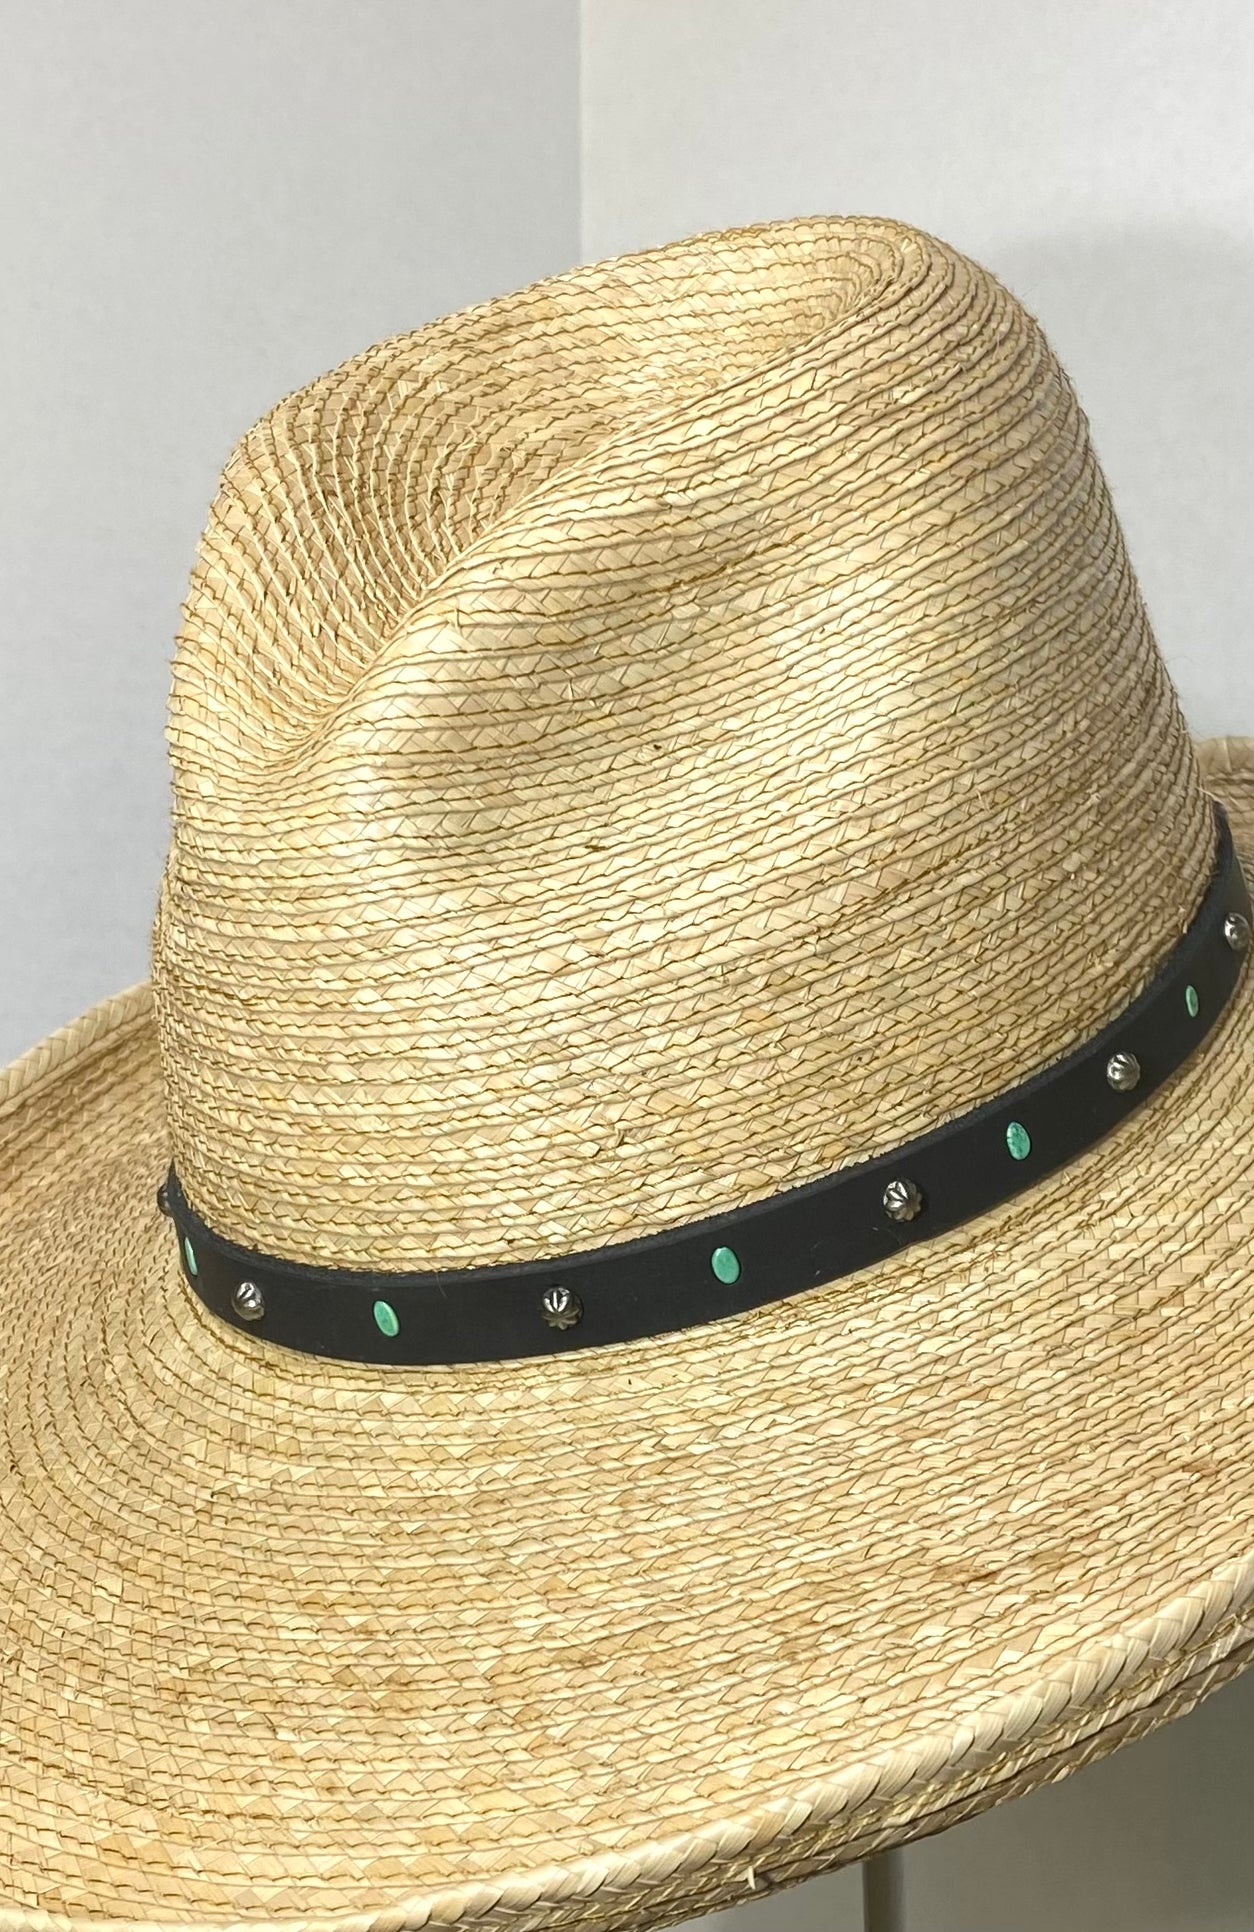 Black & Turquoise Hatband